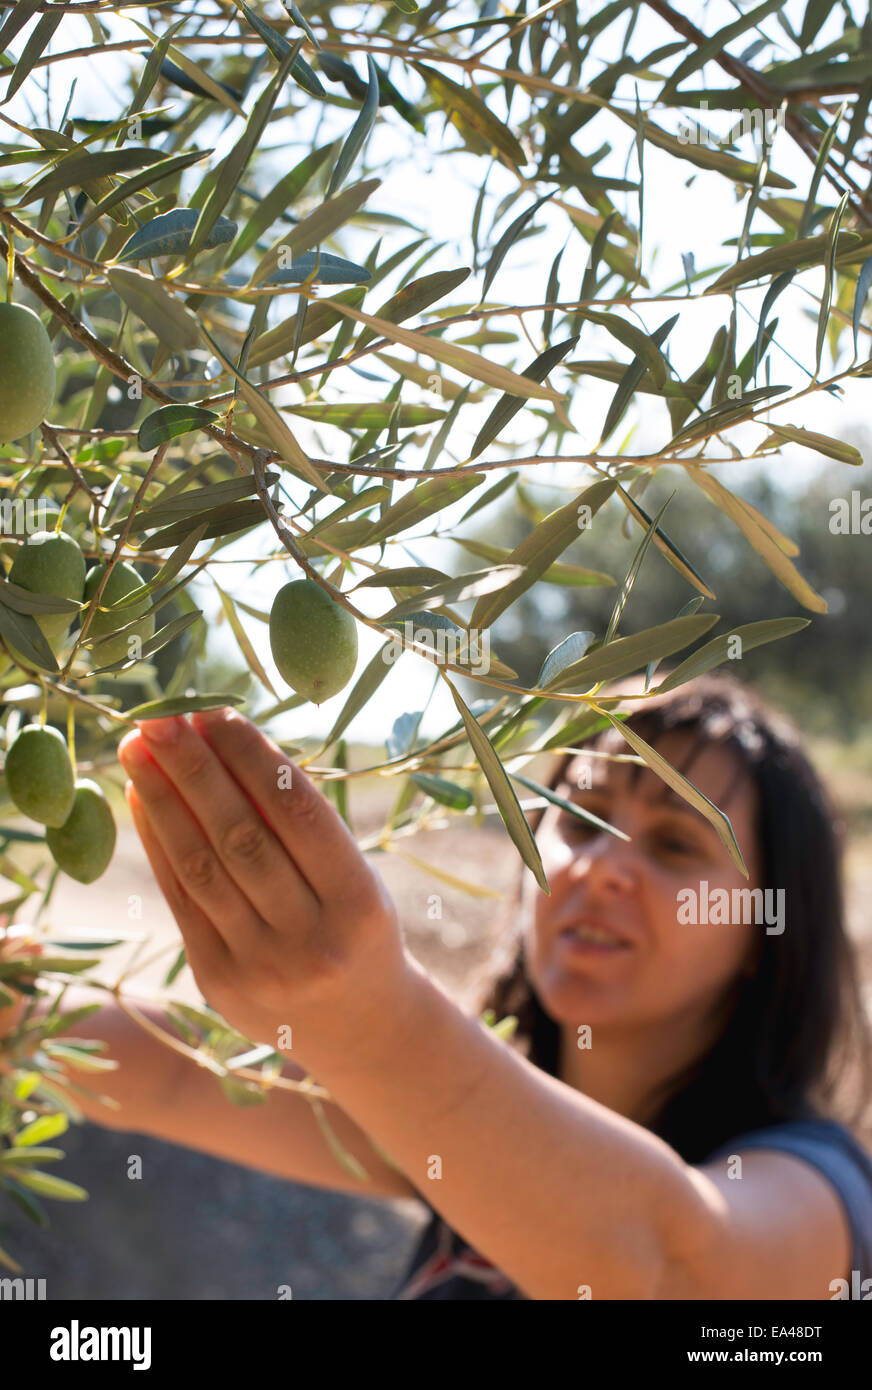 Cueillette des olives.Woman holding olive branch Banque D'Images